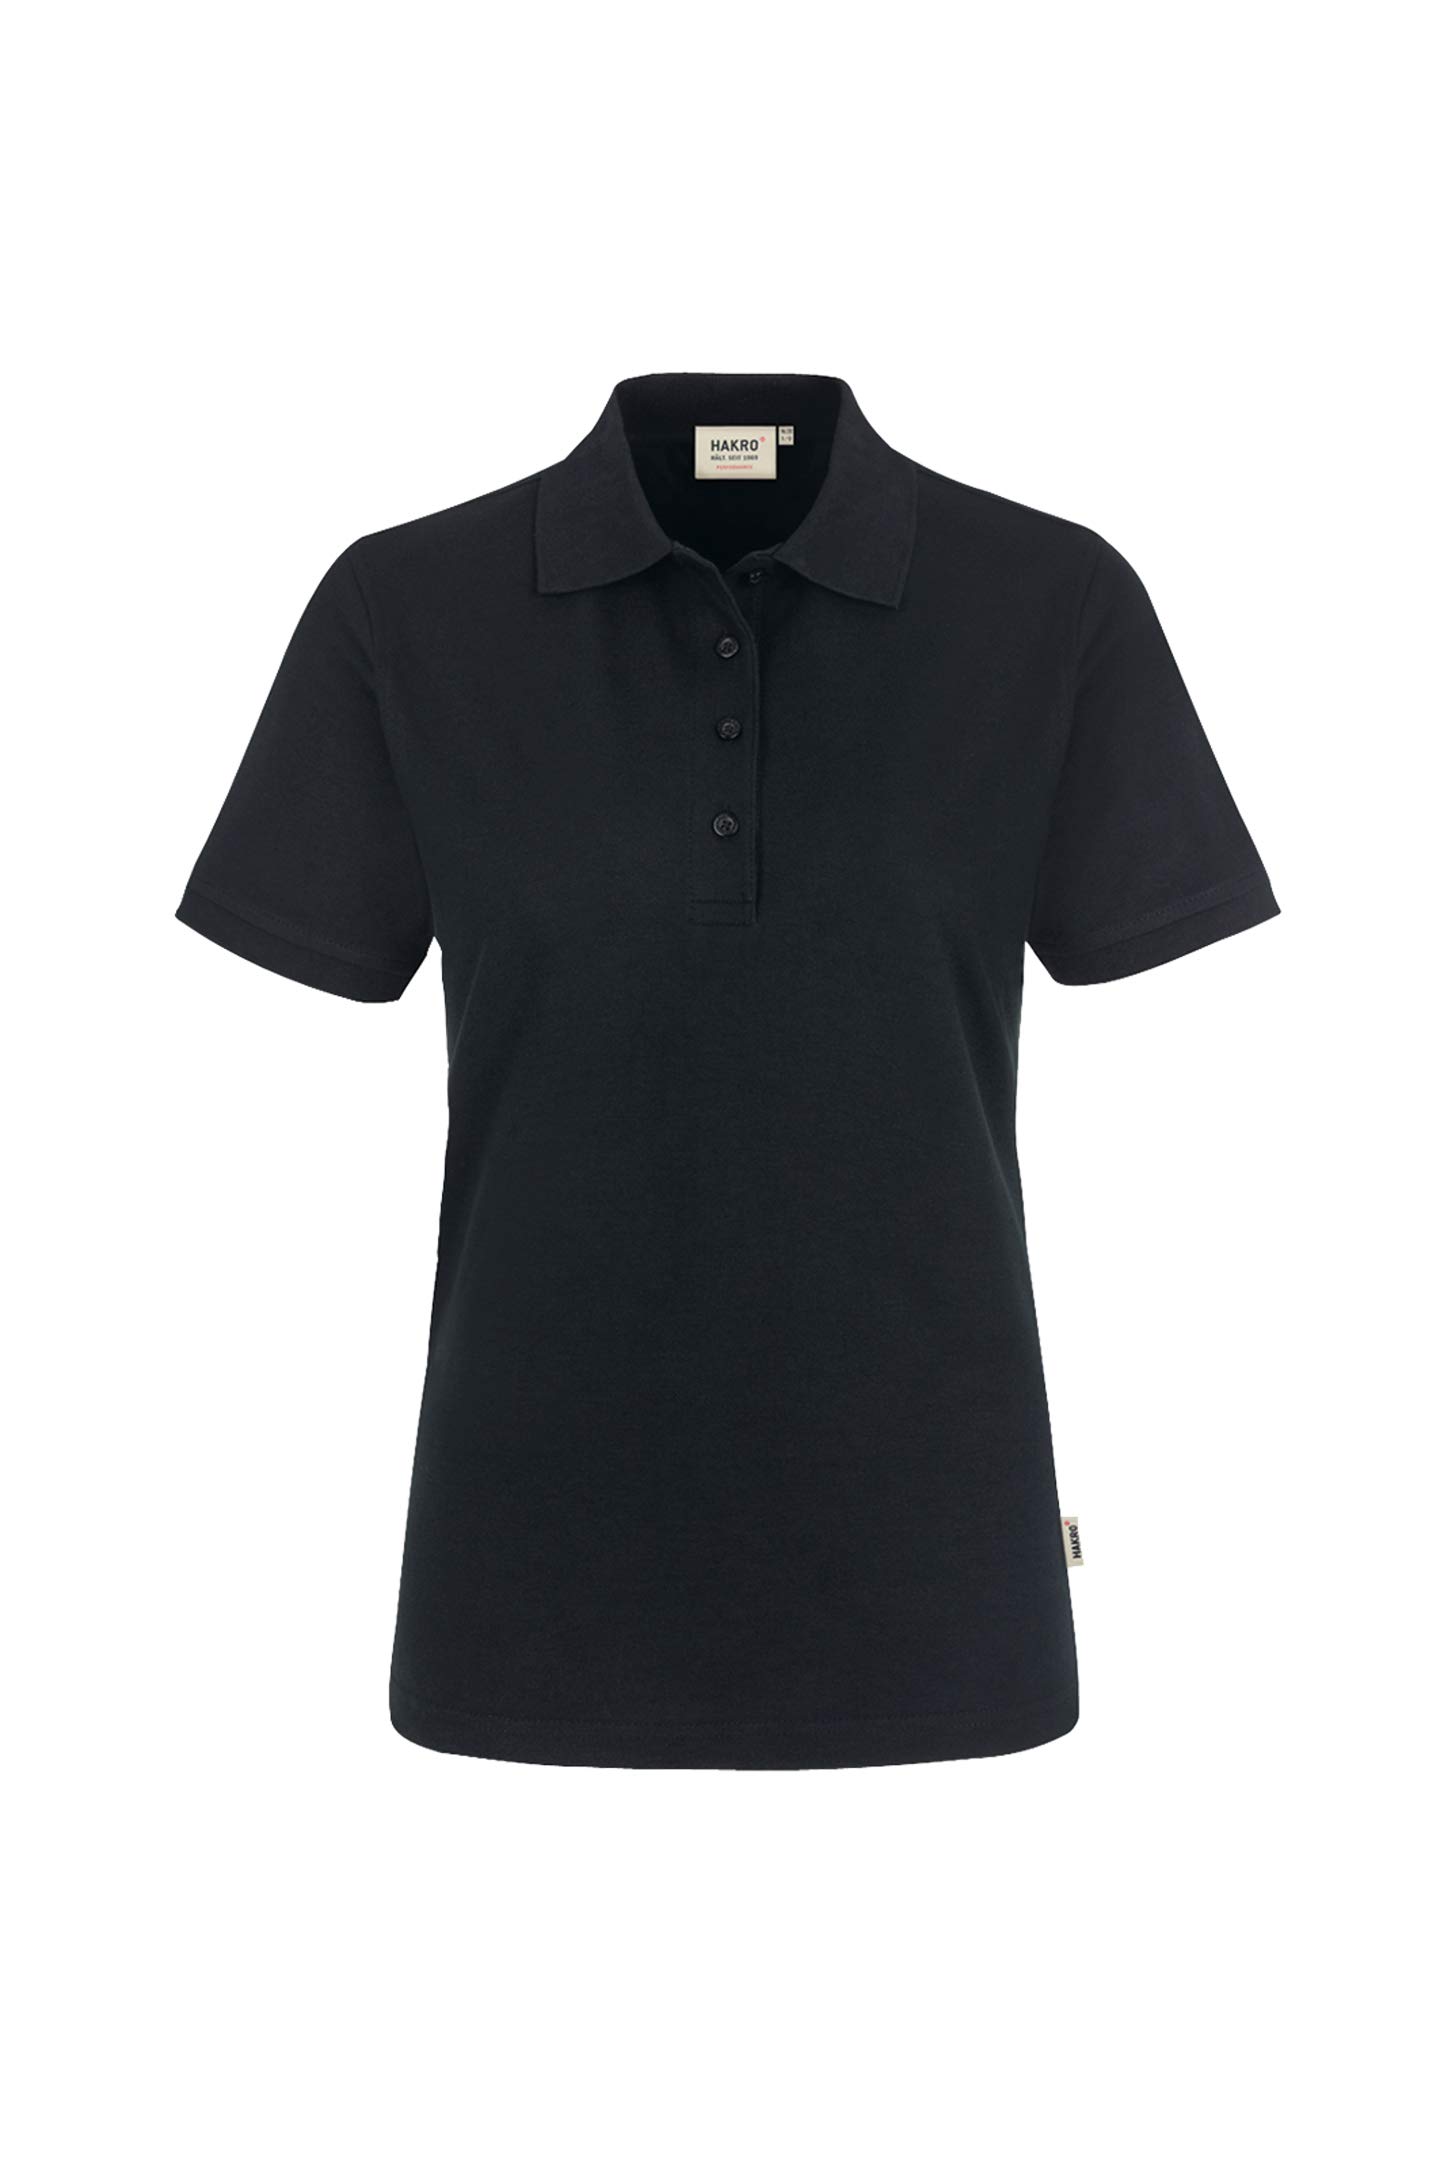 HAKRO Damen Polo-Shirt Performance - 216 - schwarz - Größe: 4XL